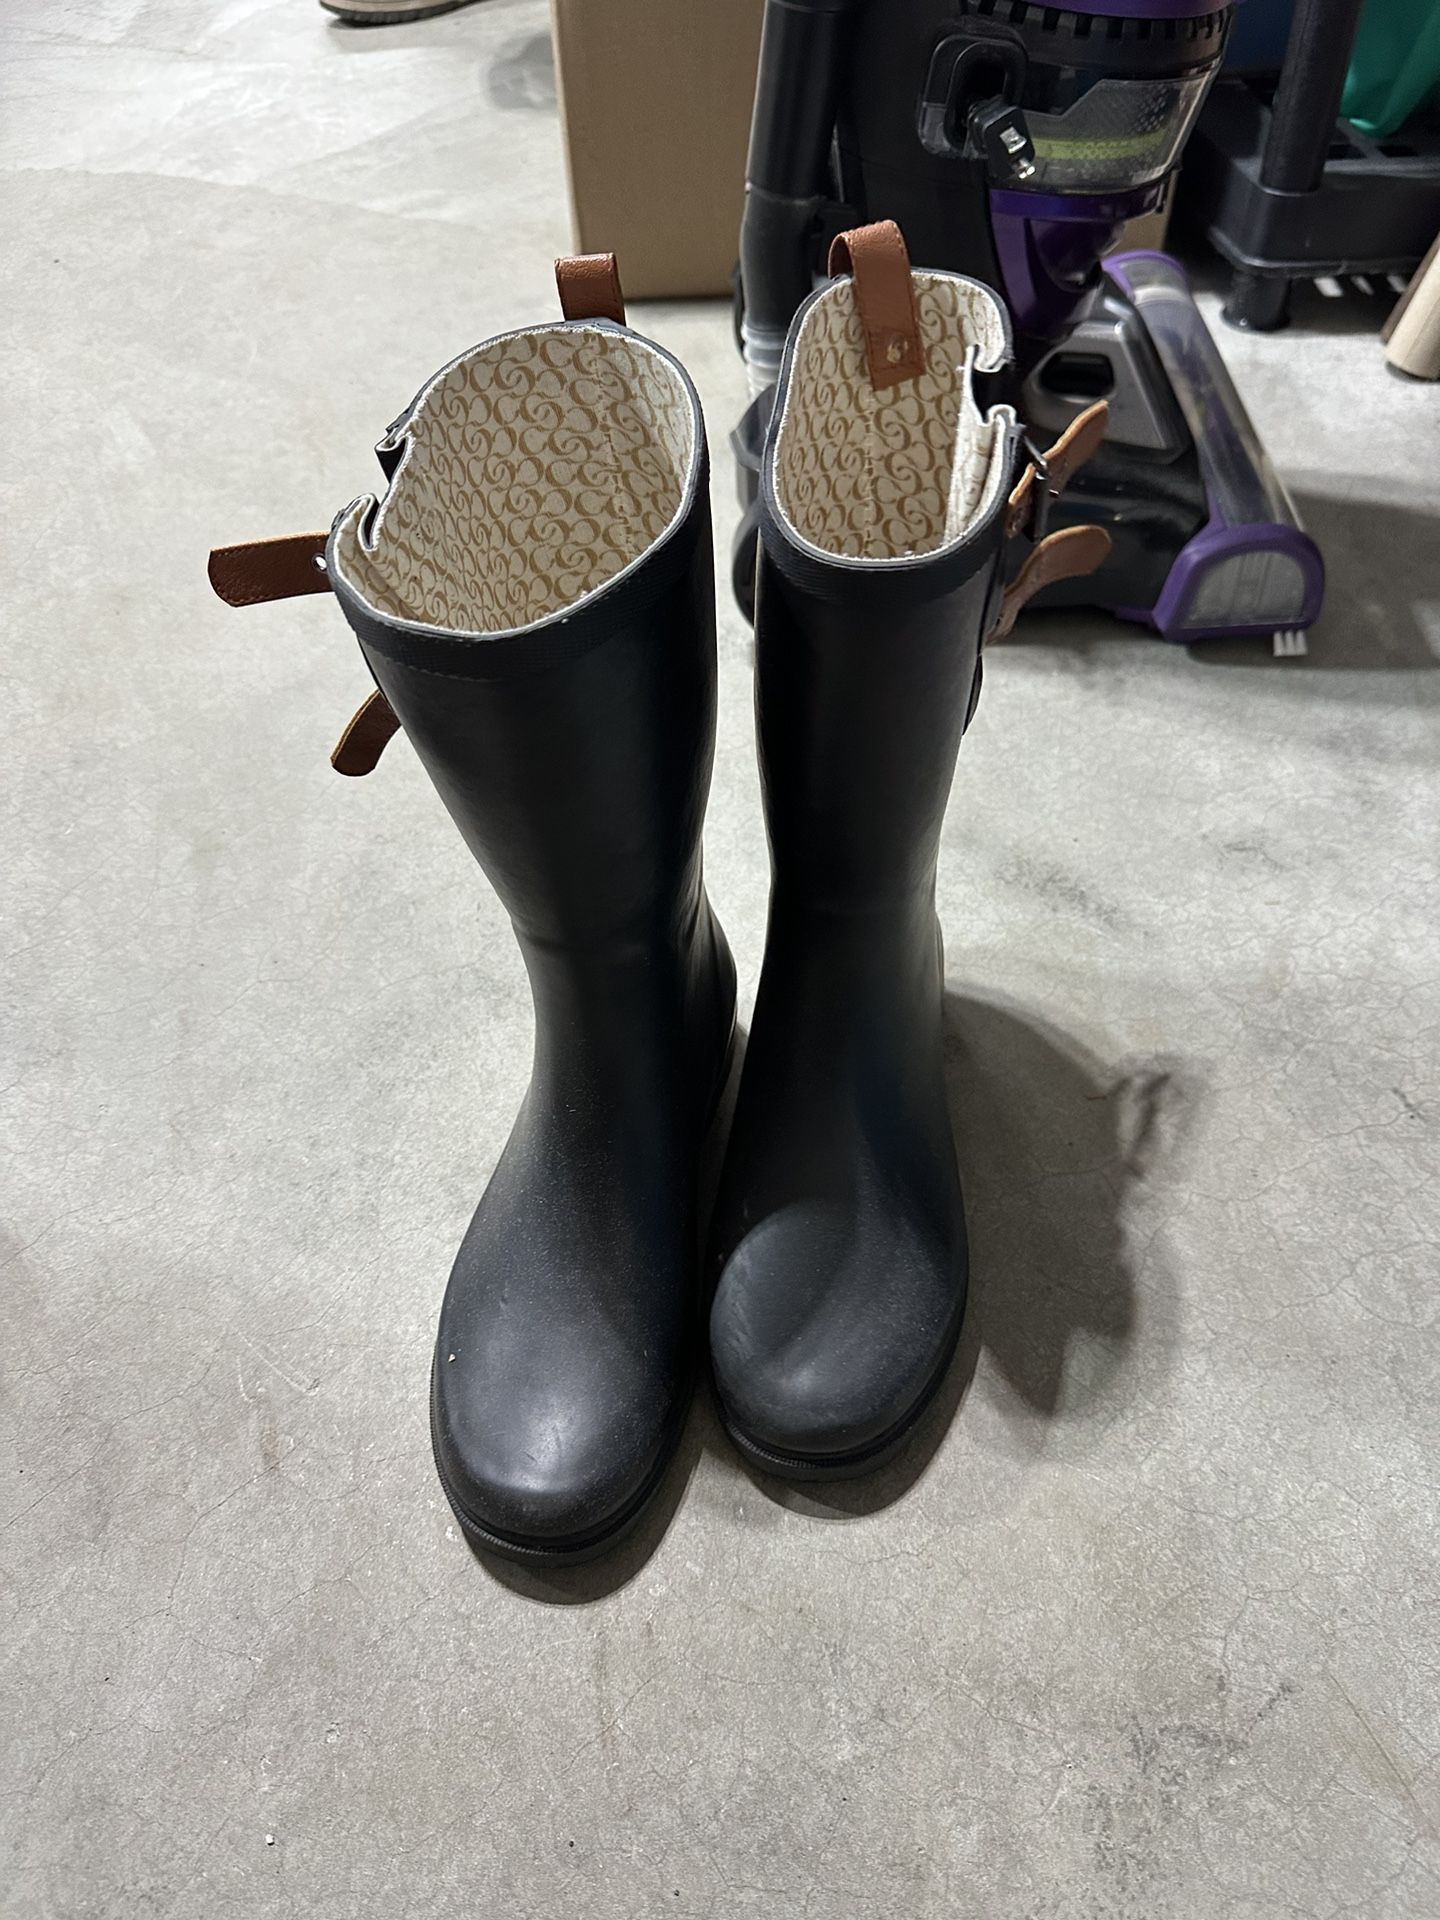 Snow / rain boots 